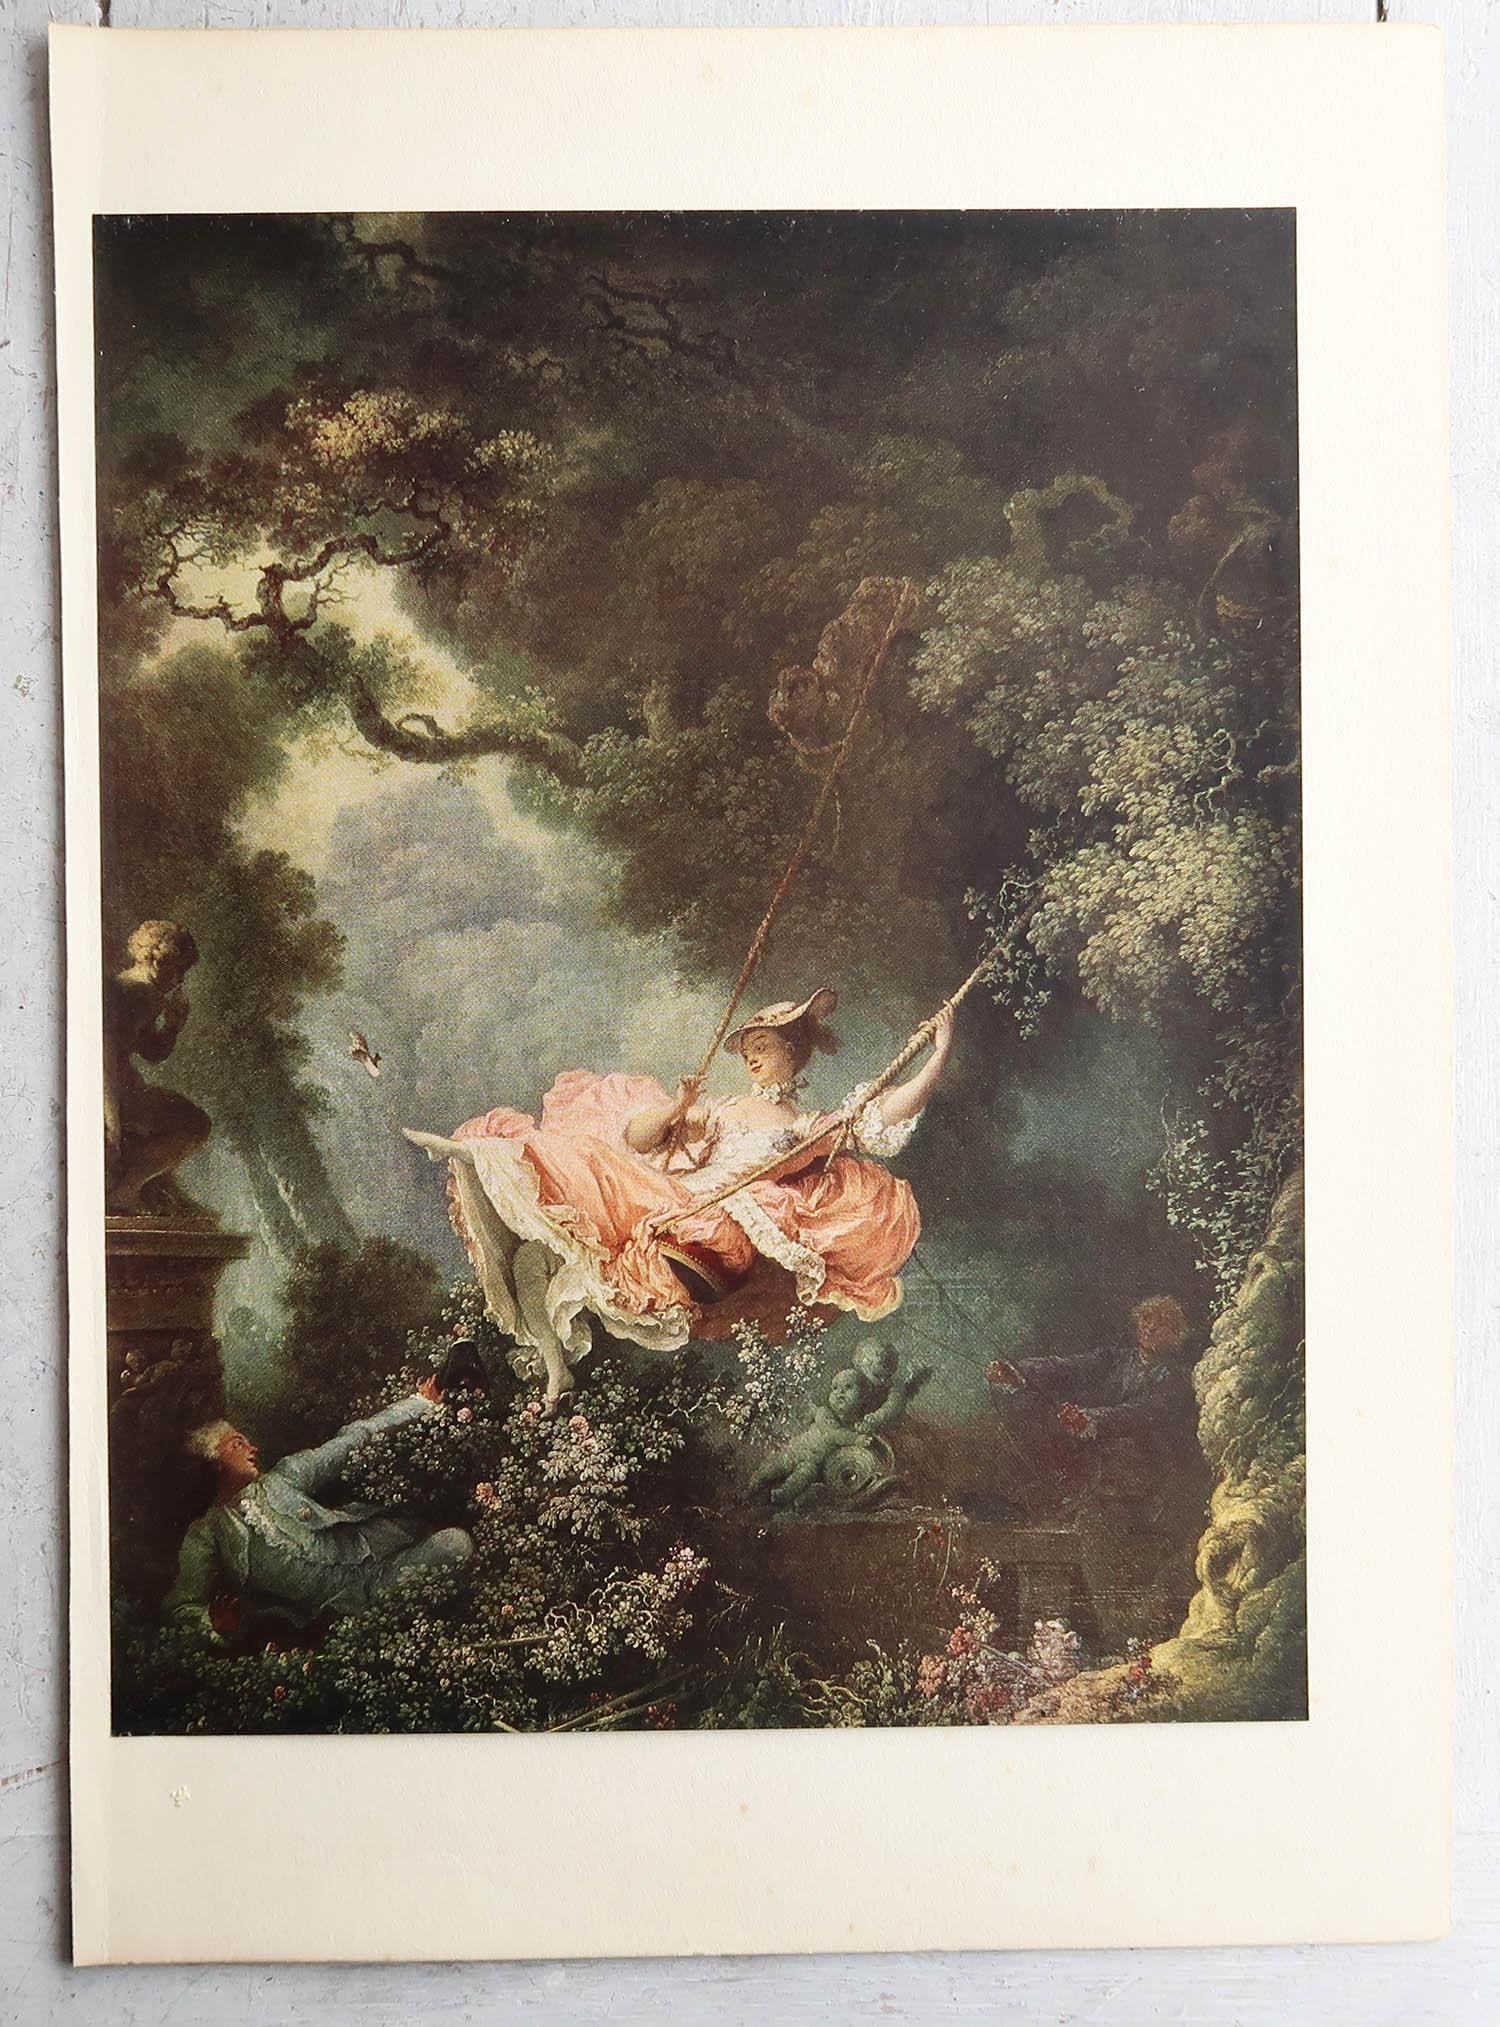 English Original Antique Print After Jean Honore Fragonard, circa 1920